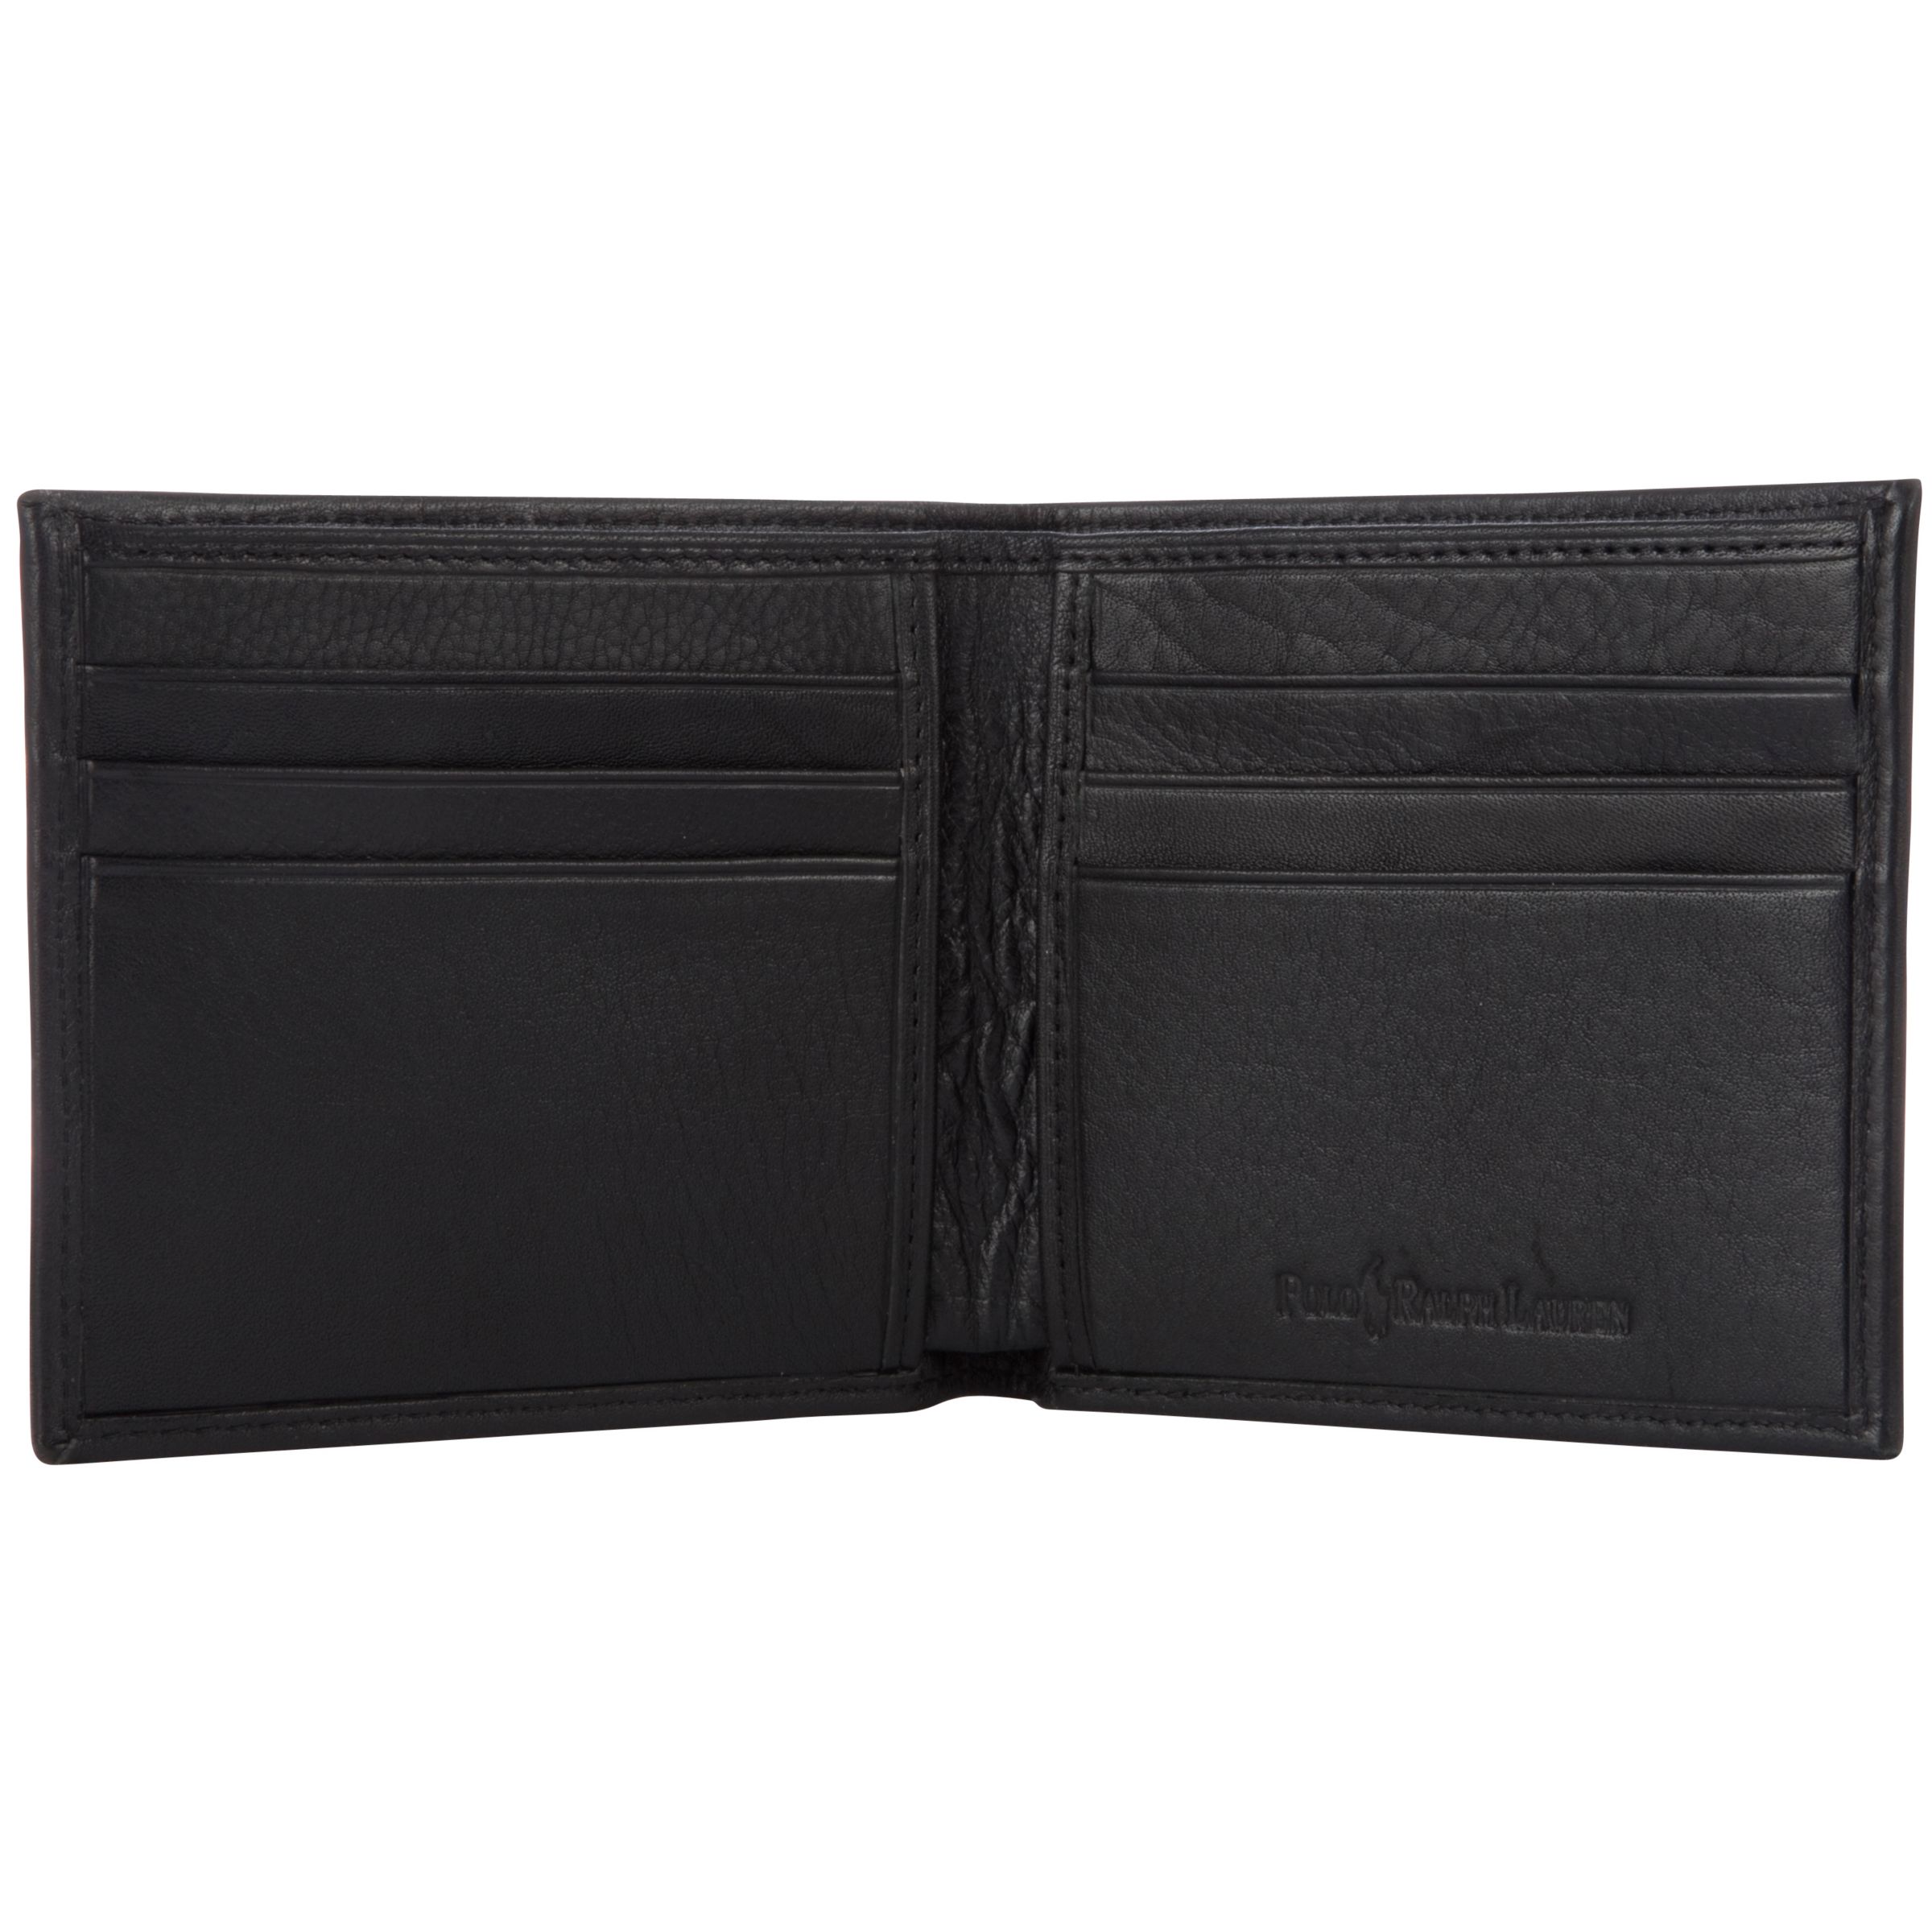 Polo Ralph Lauren Pebble Grain Leather Wallet, Black at John Lewis ...